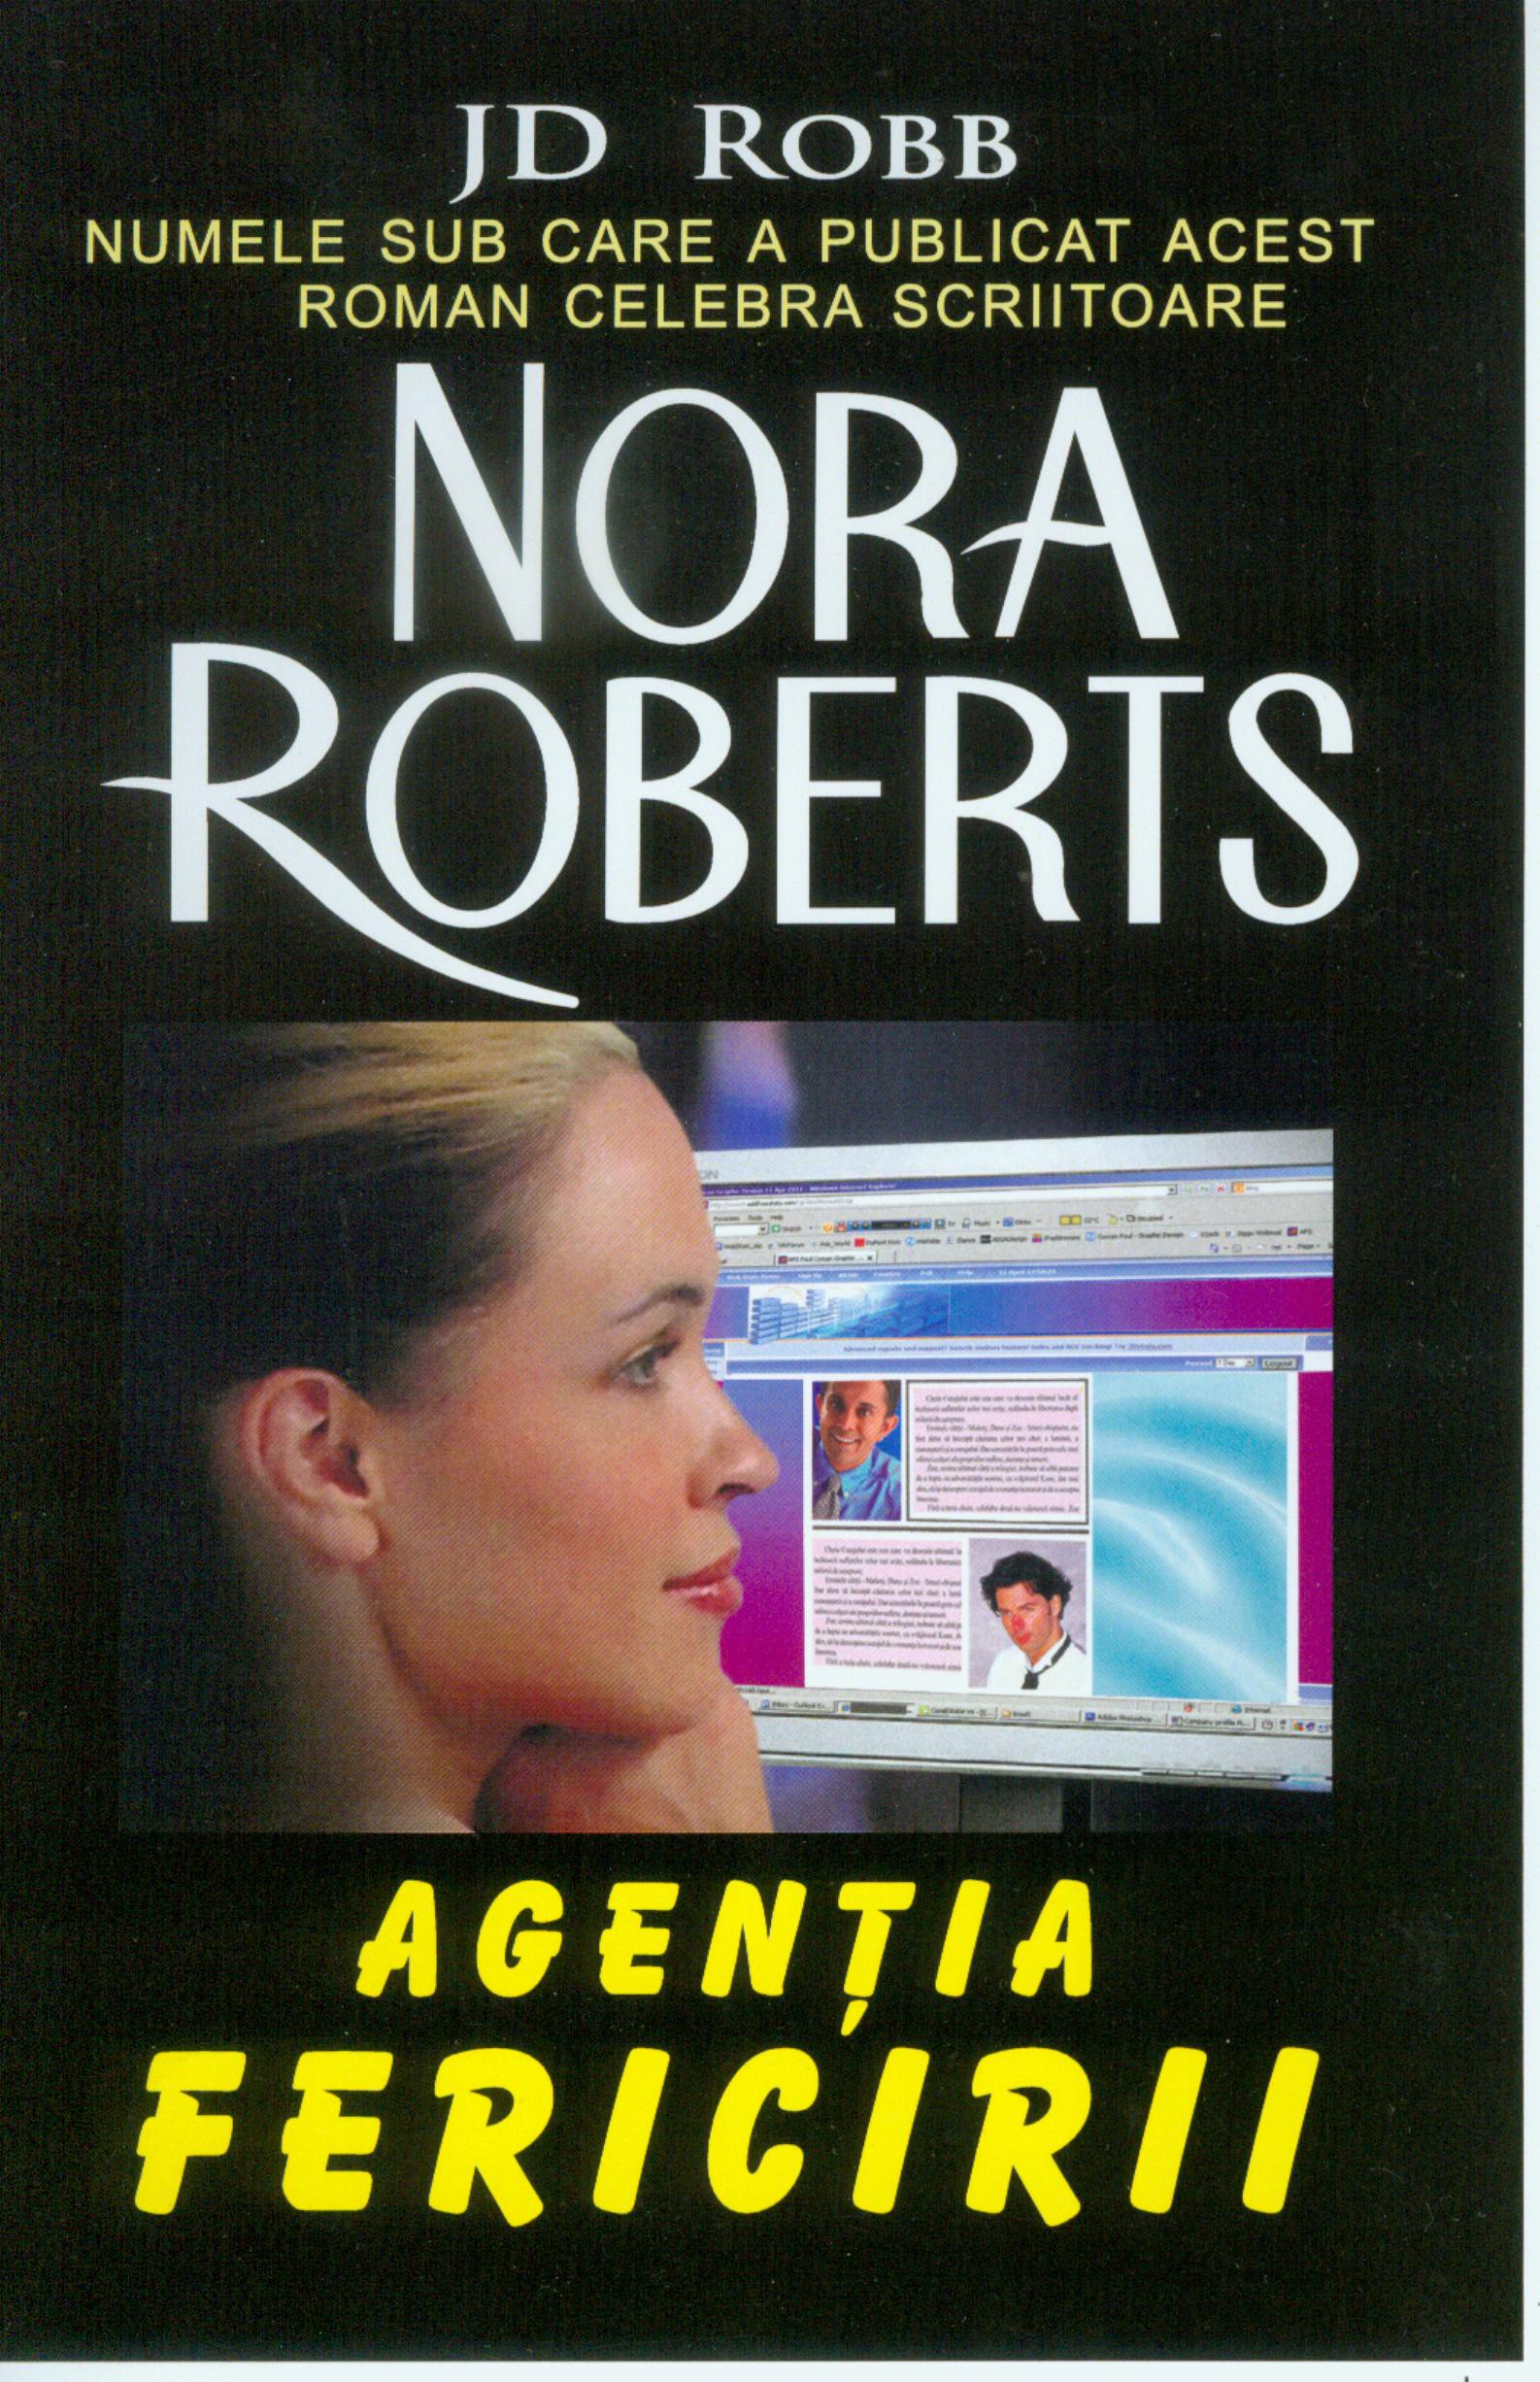 Agentia fericirii - J.D. Robb (Nora Roberts)